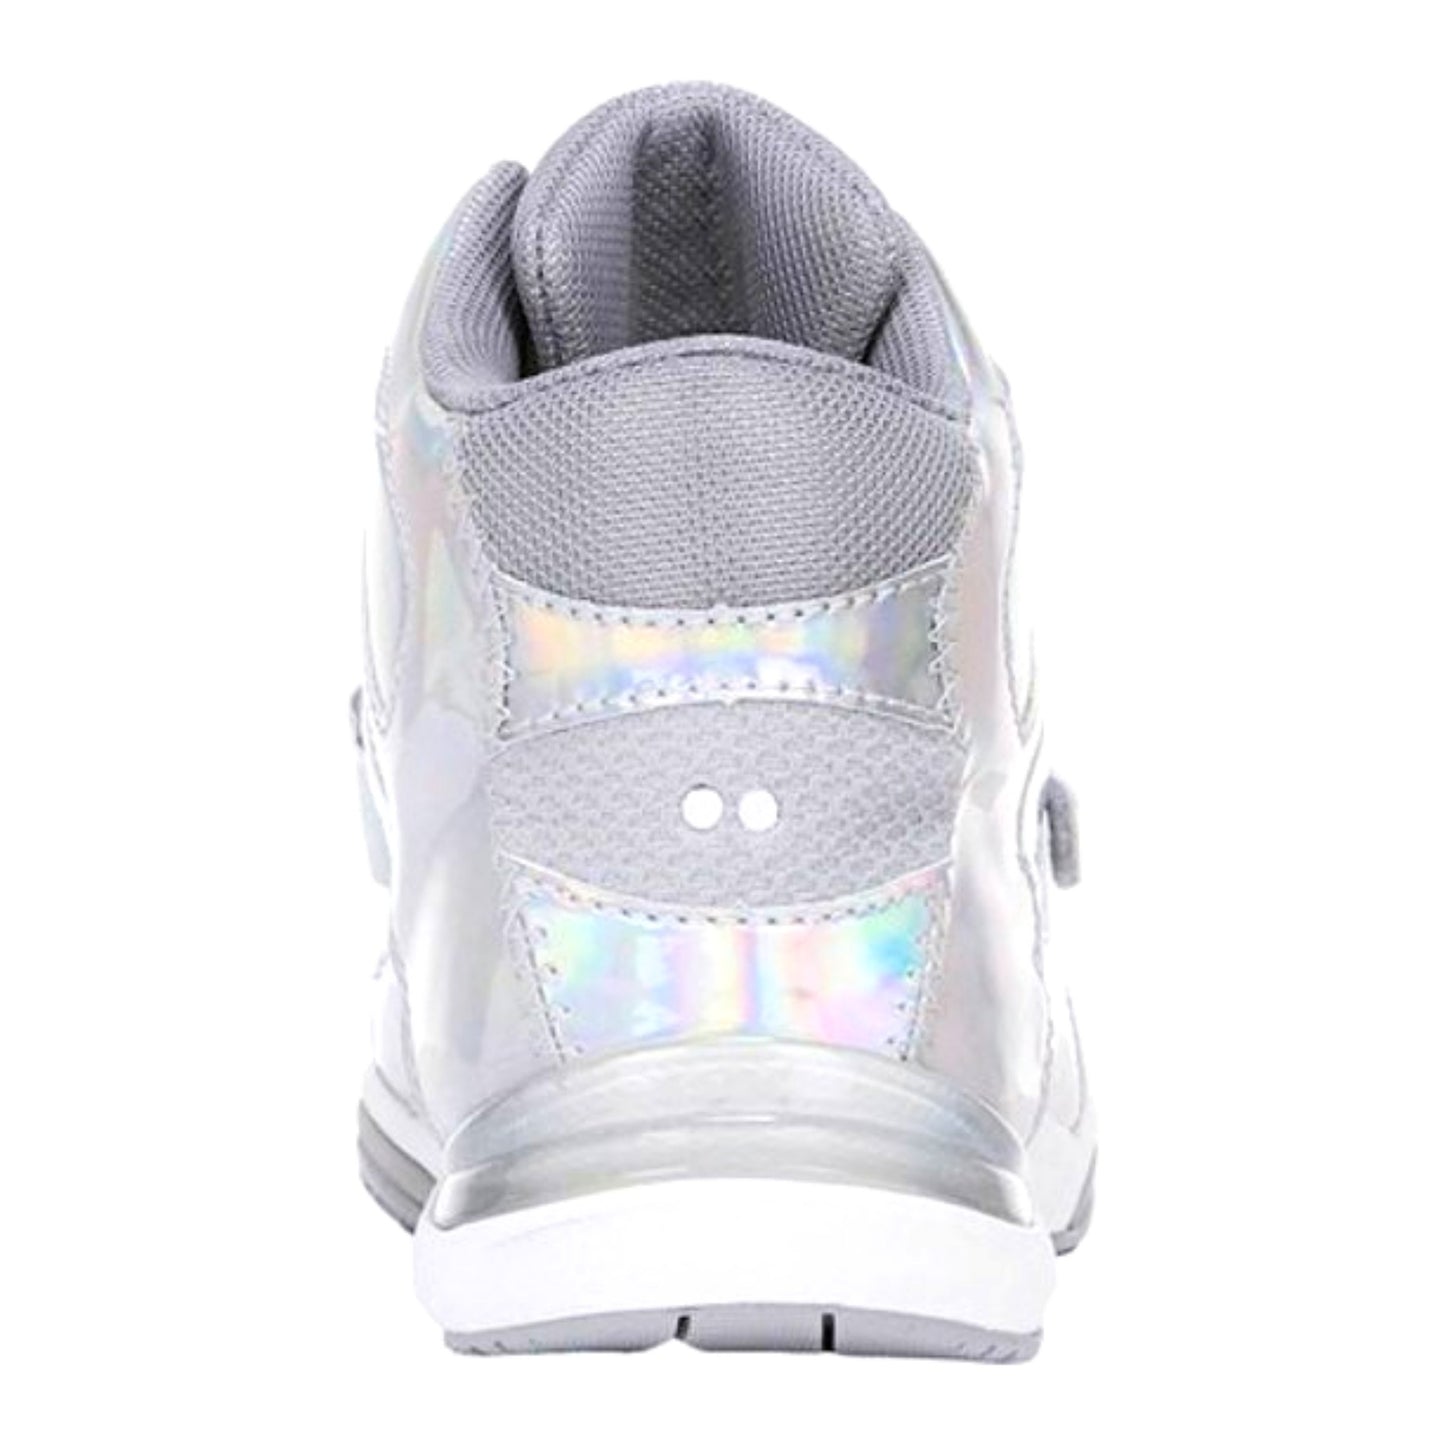 Ryka Tenacious Patent Silver Rainbow Iridescent Comfort Shoe Training Sneakers